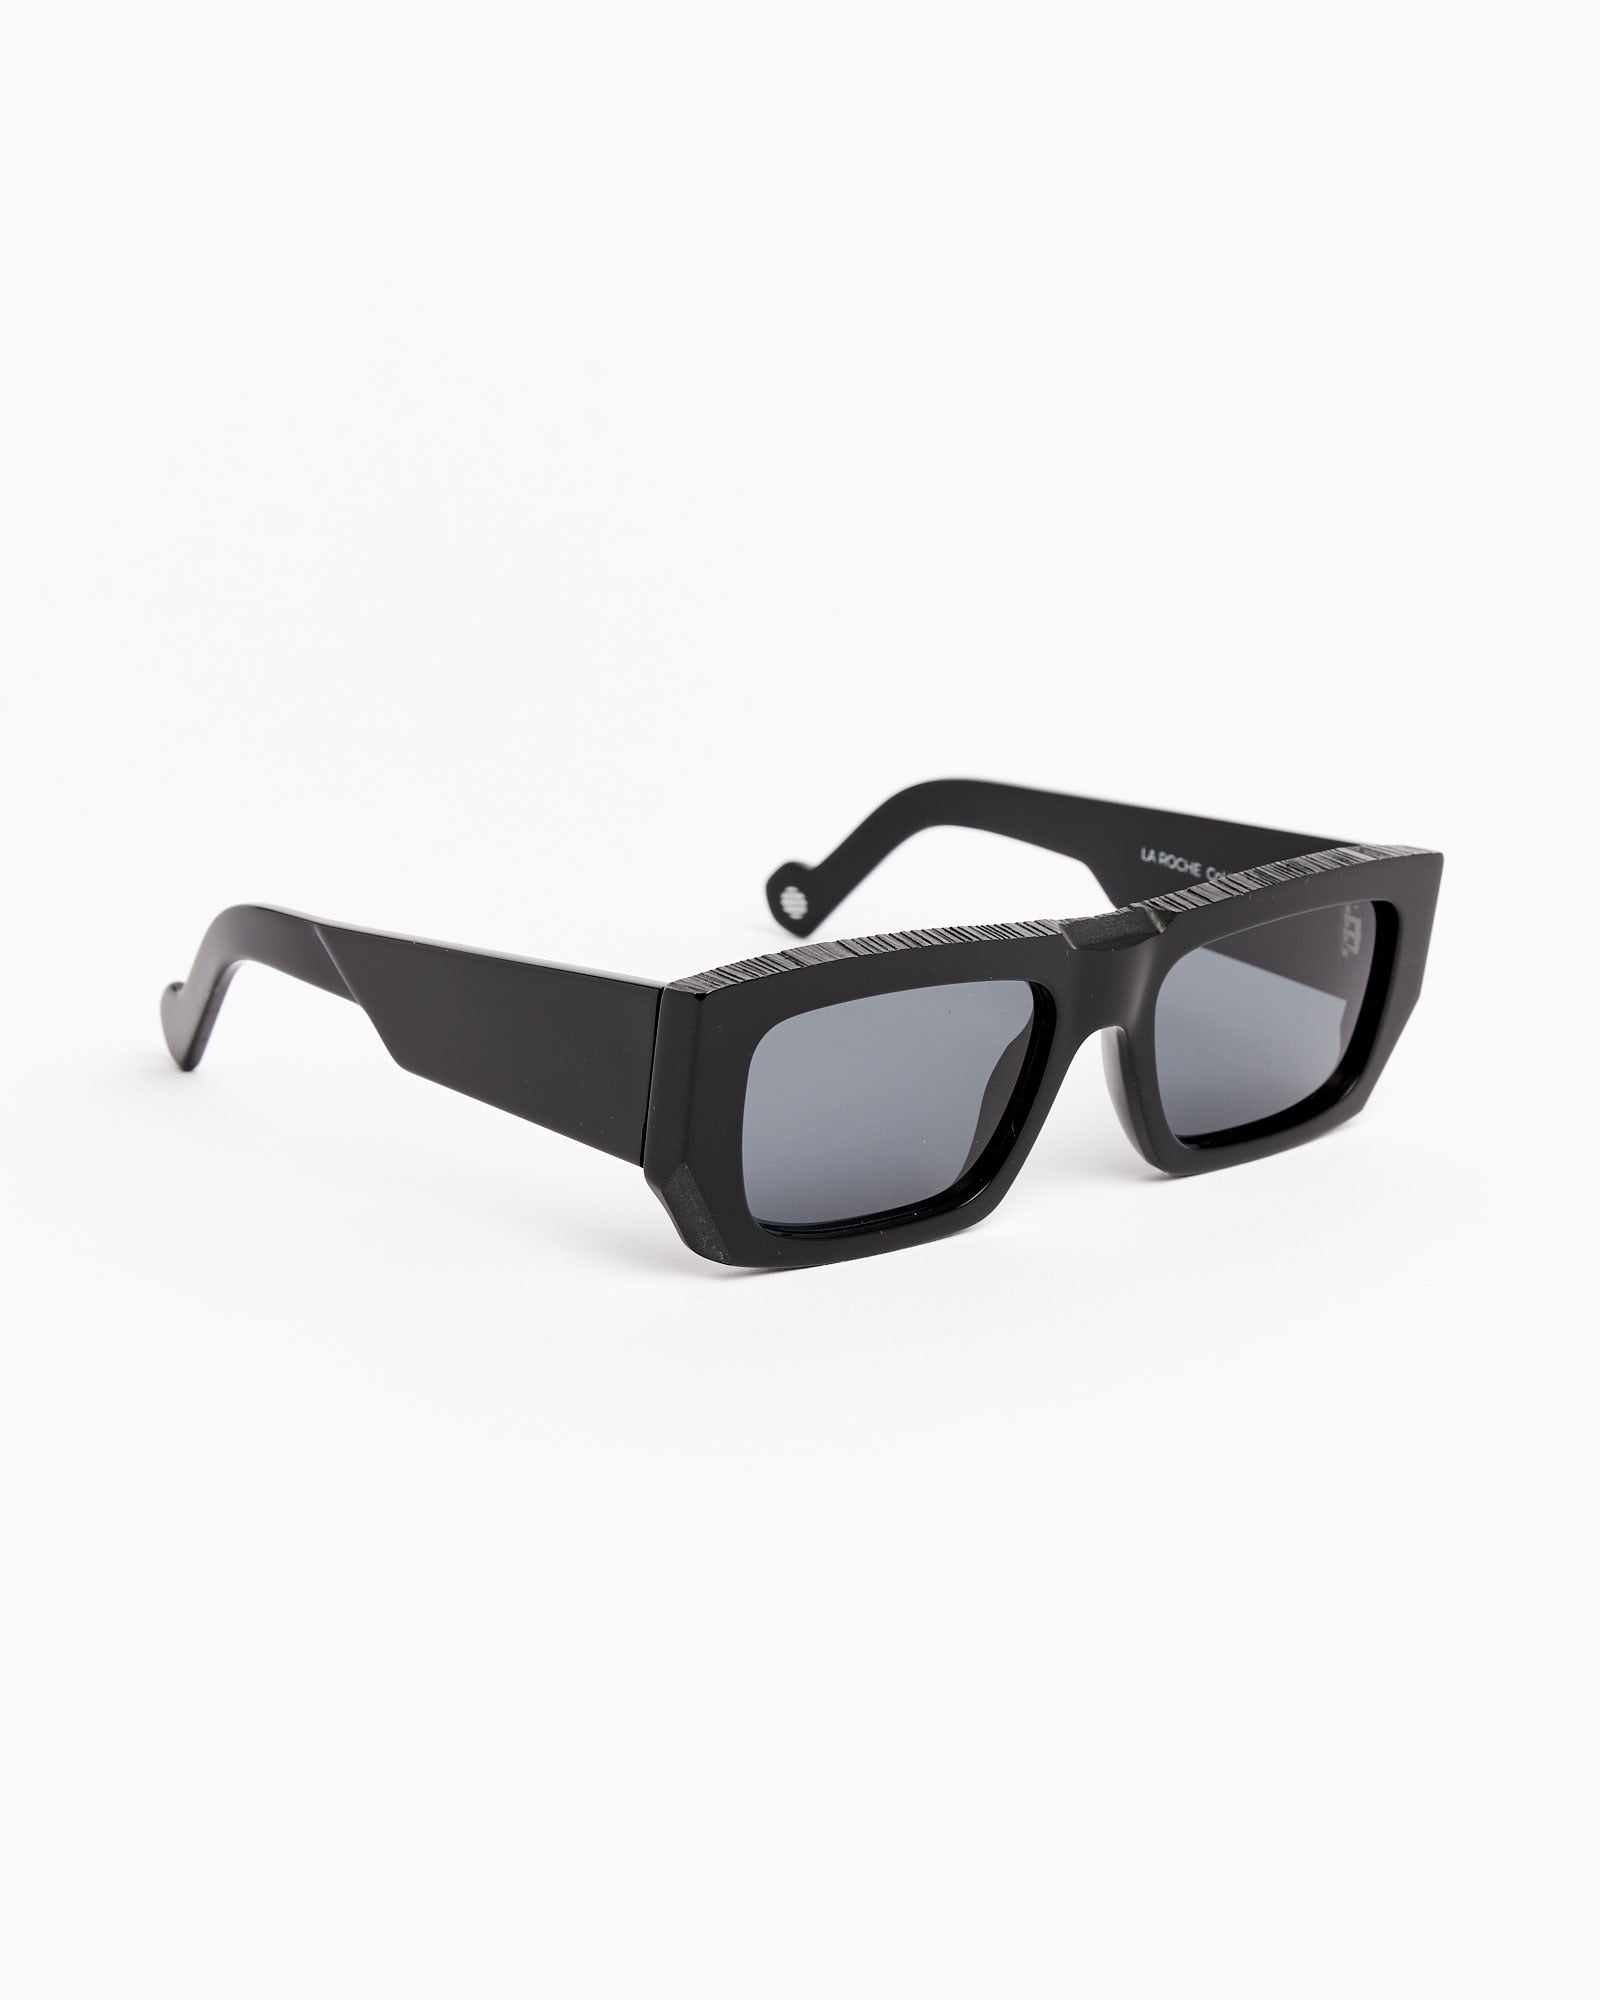 Auralee x Eyevan 7285 Sunglasses in Navy – Mohawk General Store